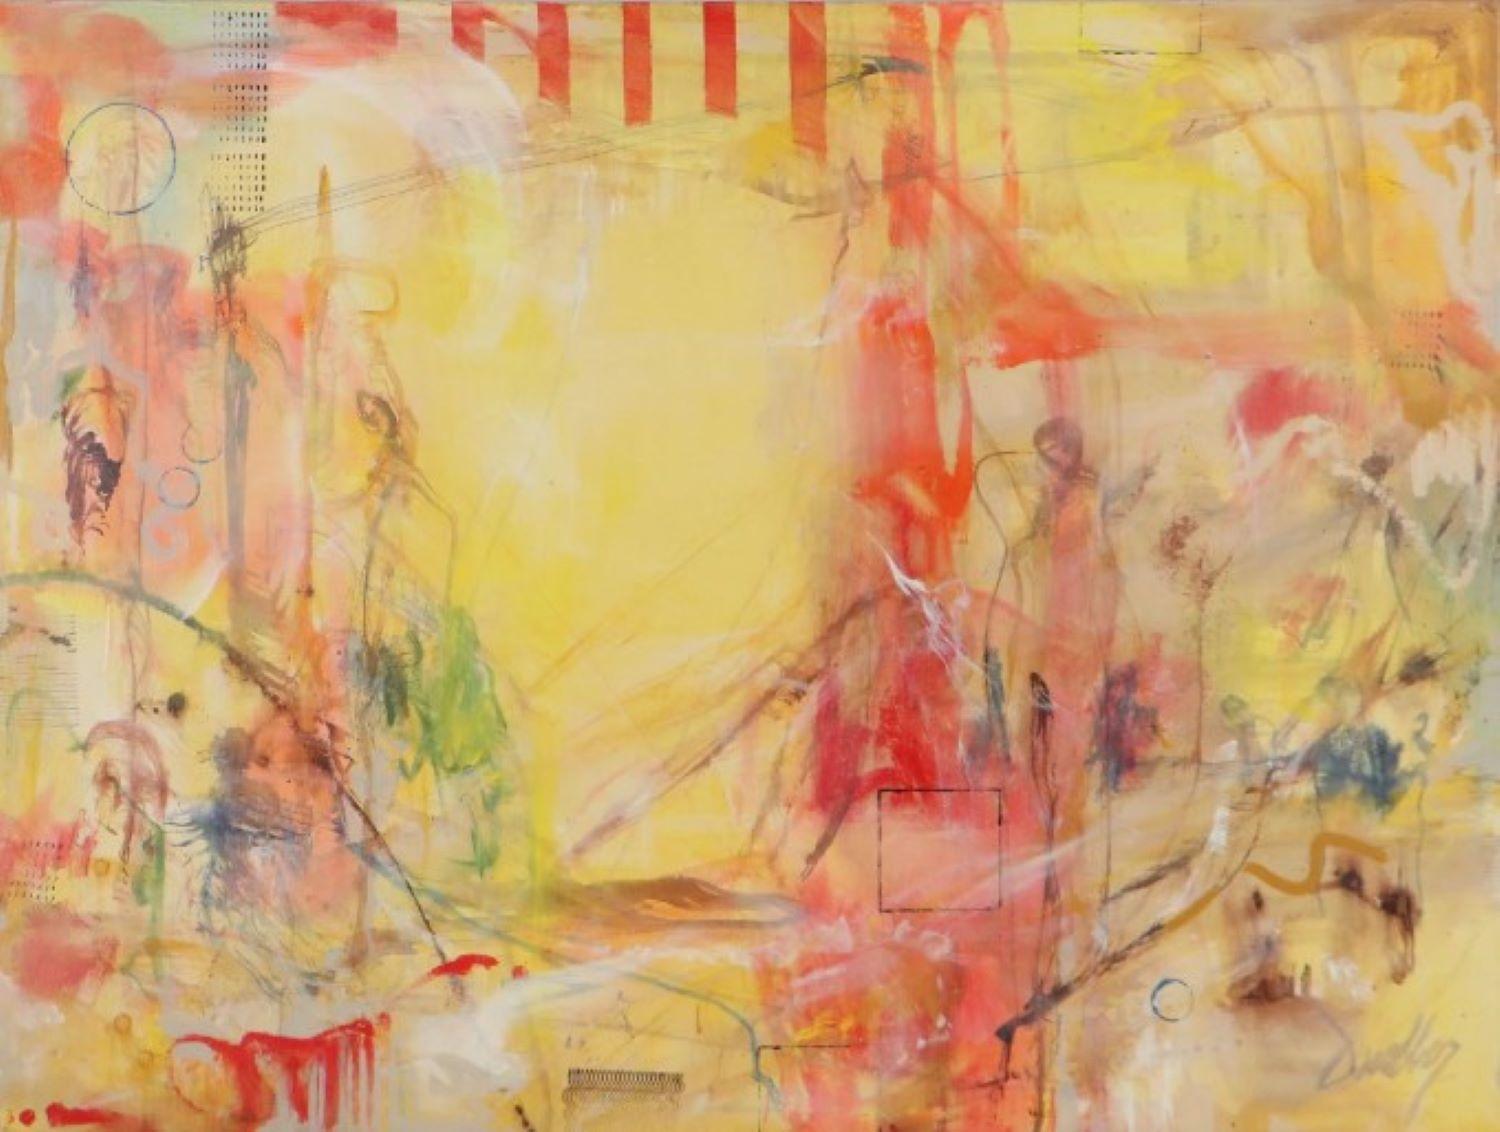 Celebration - Contemporary abstract original canvas, poetic, dreamlike, lyrical